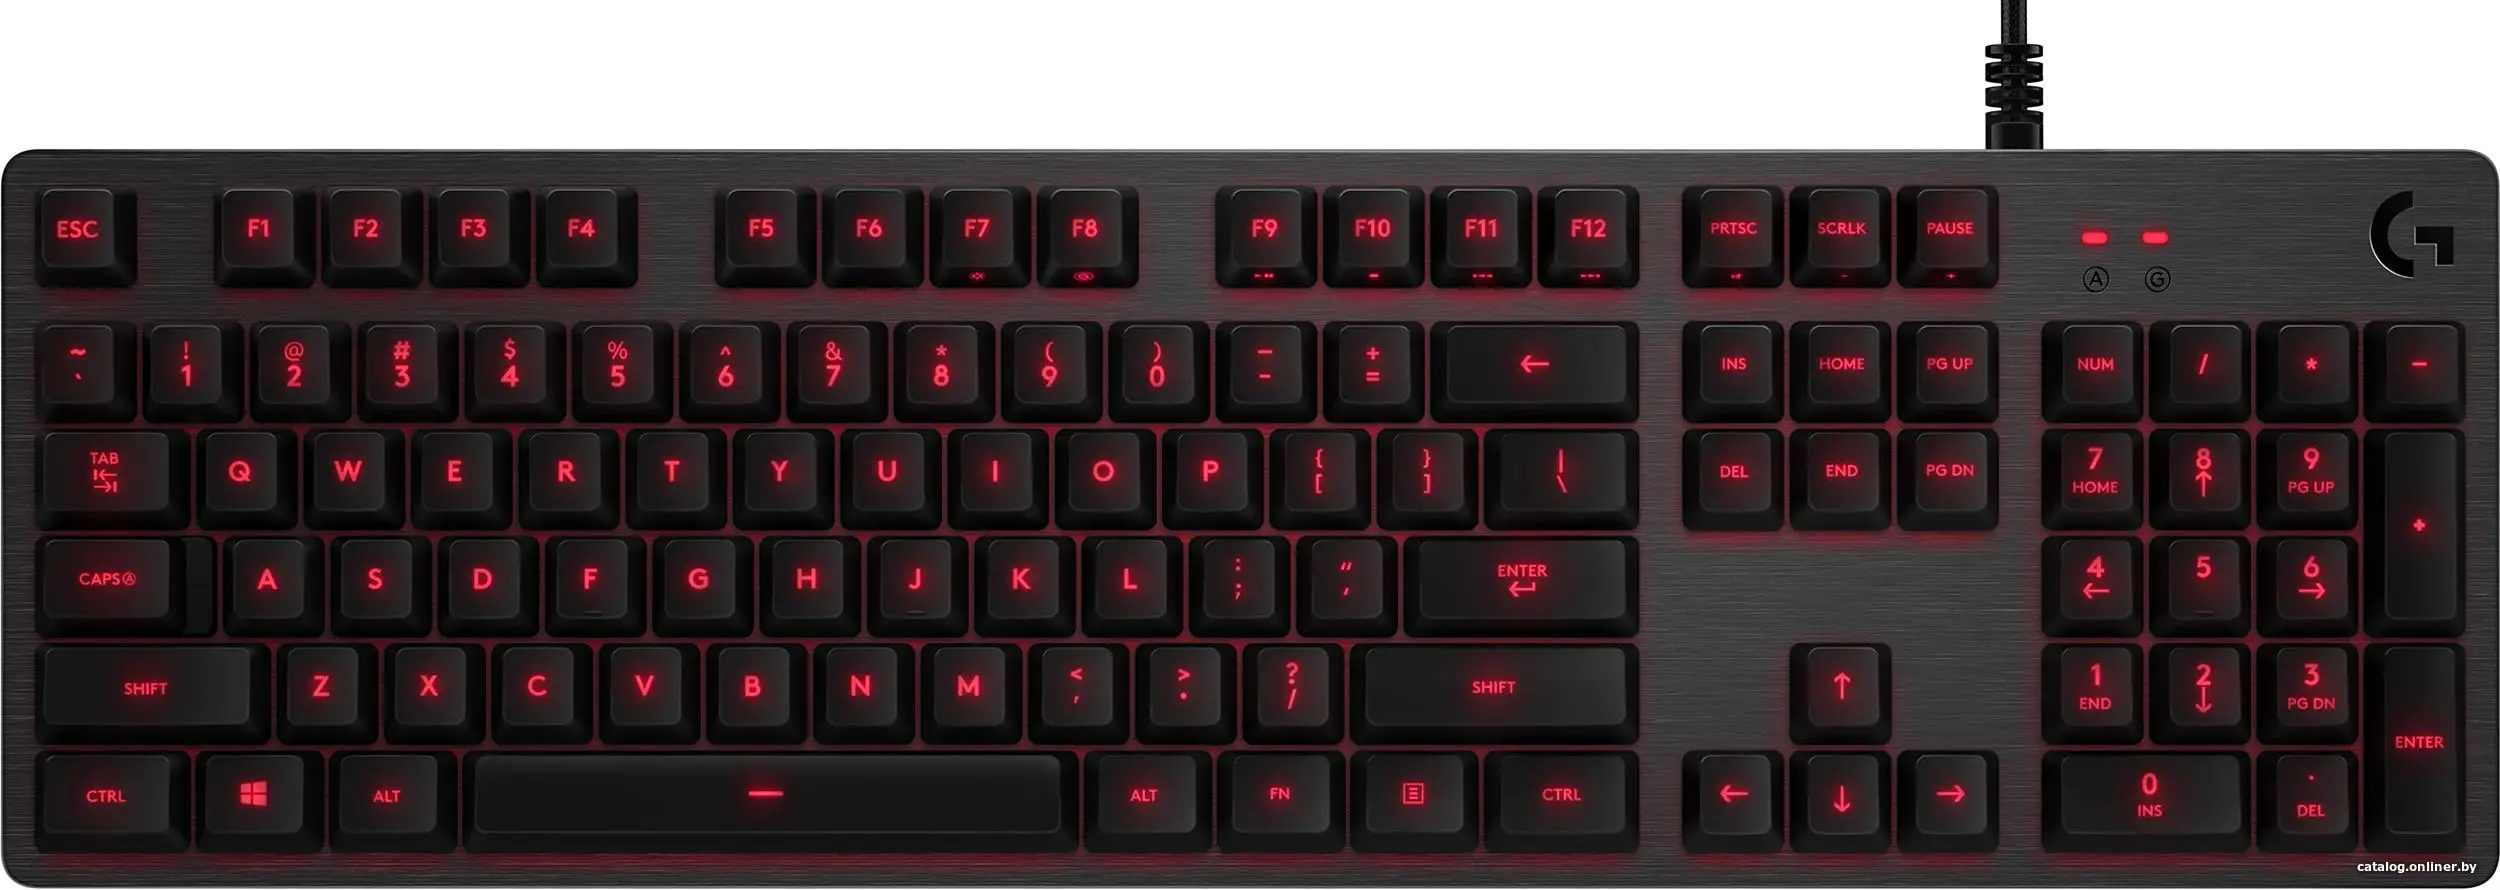 Купить LOGITECH G413 Corded Mechanical Gaming Keyboard - CARBON - RUS - USB, цена, опт и розница